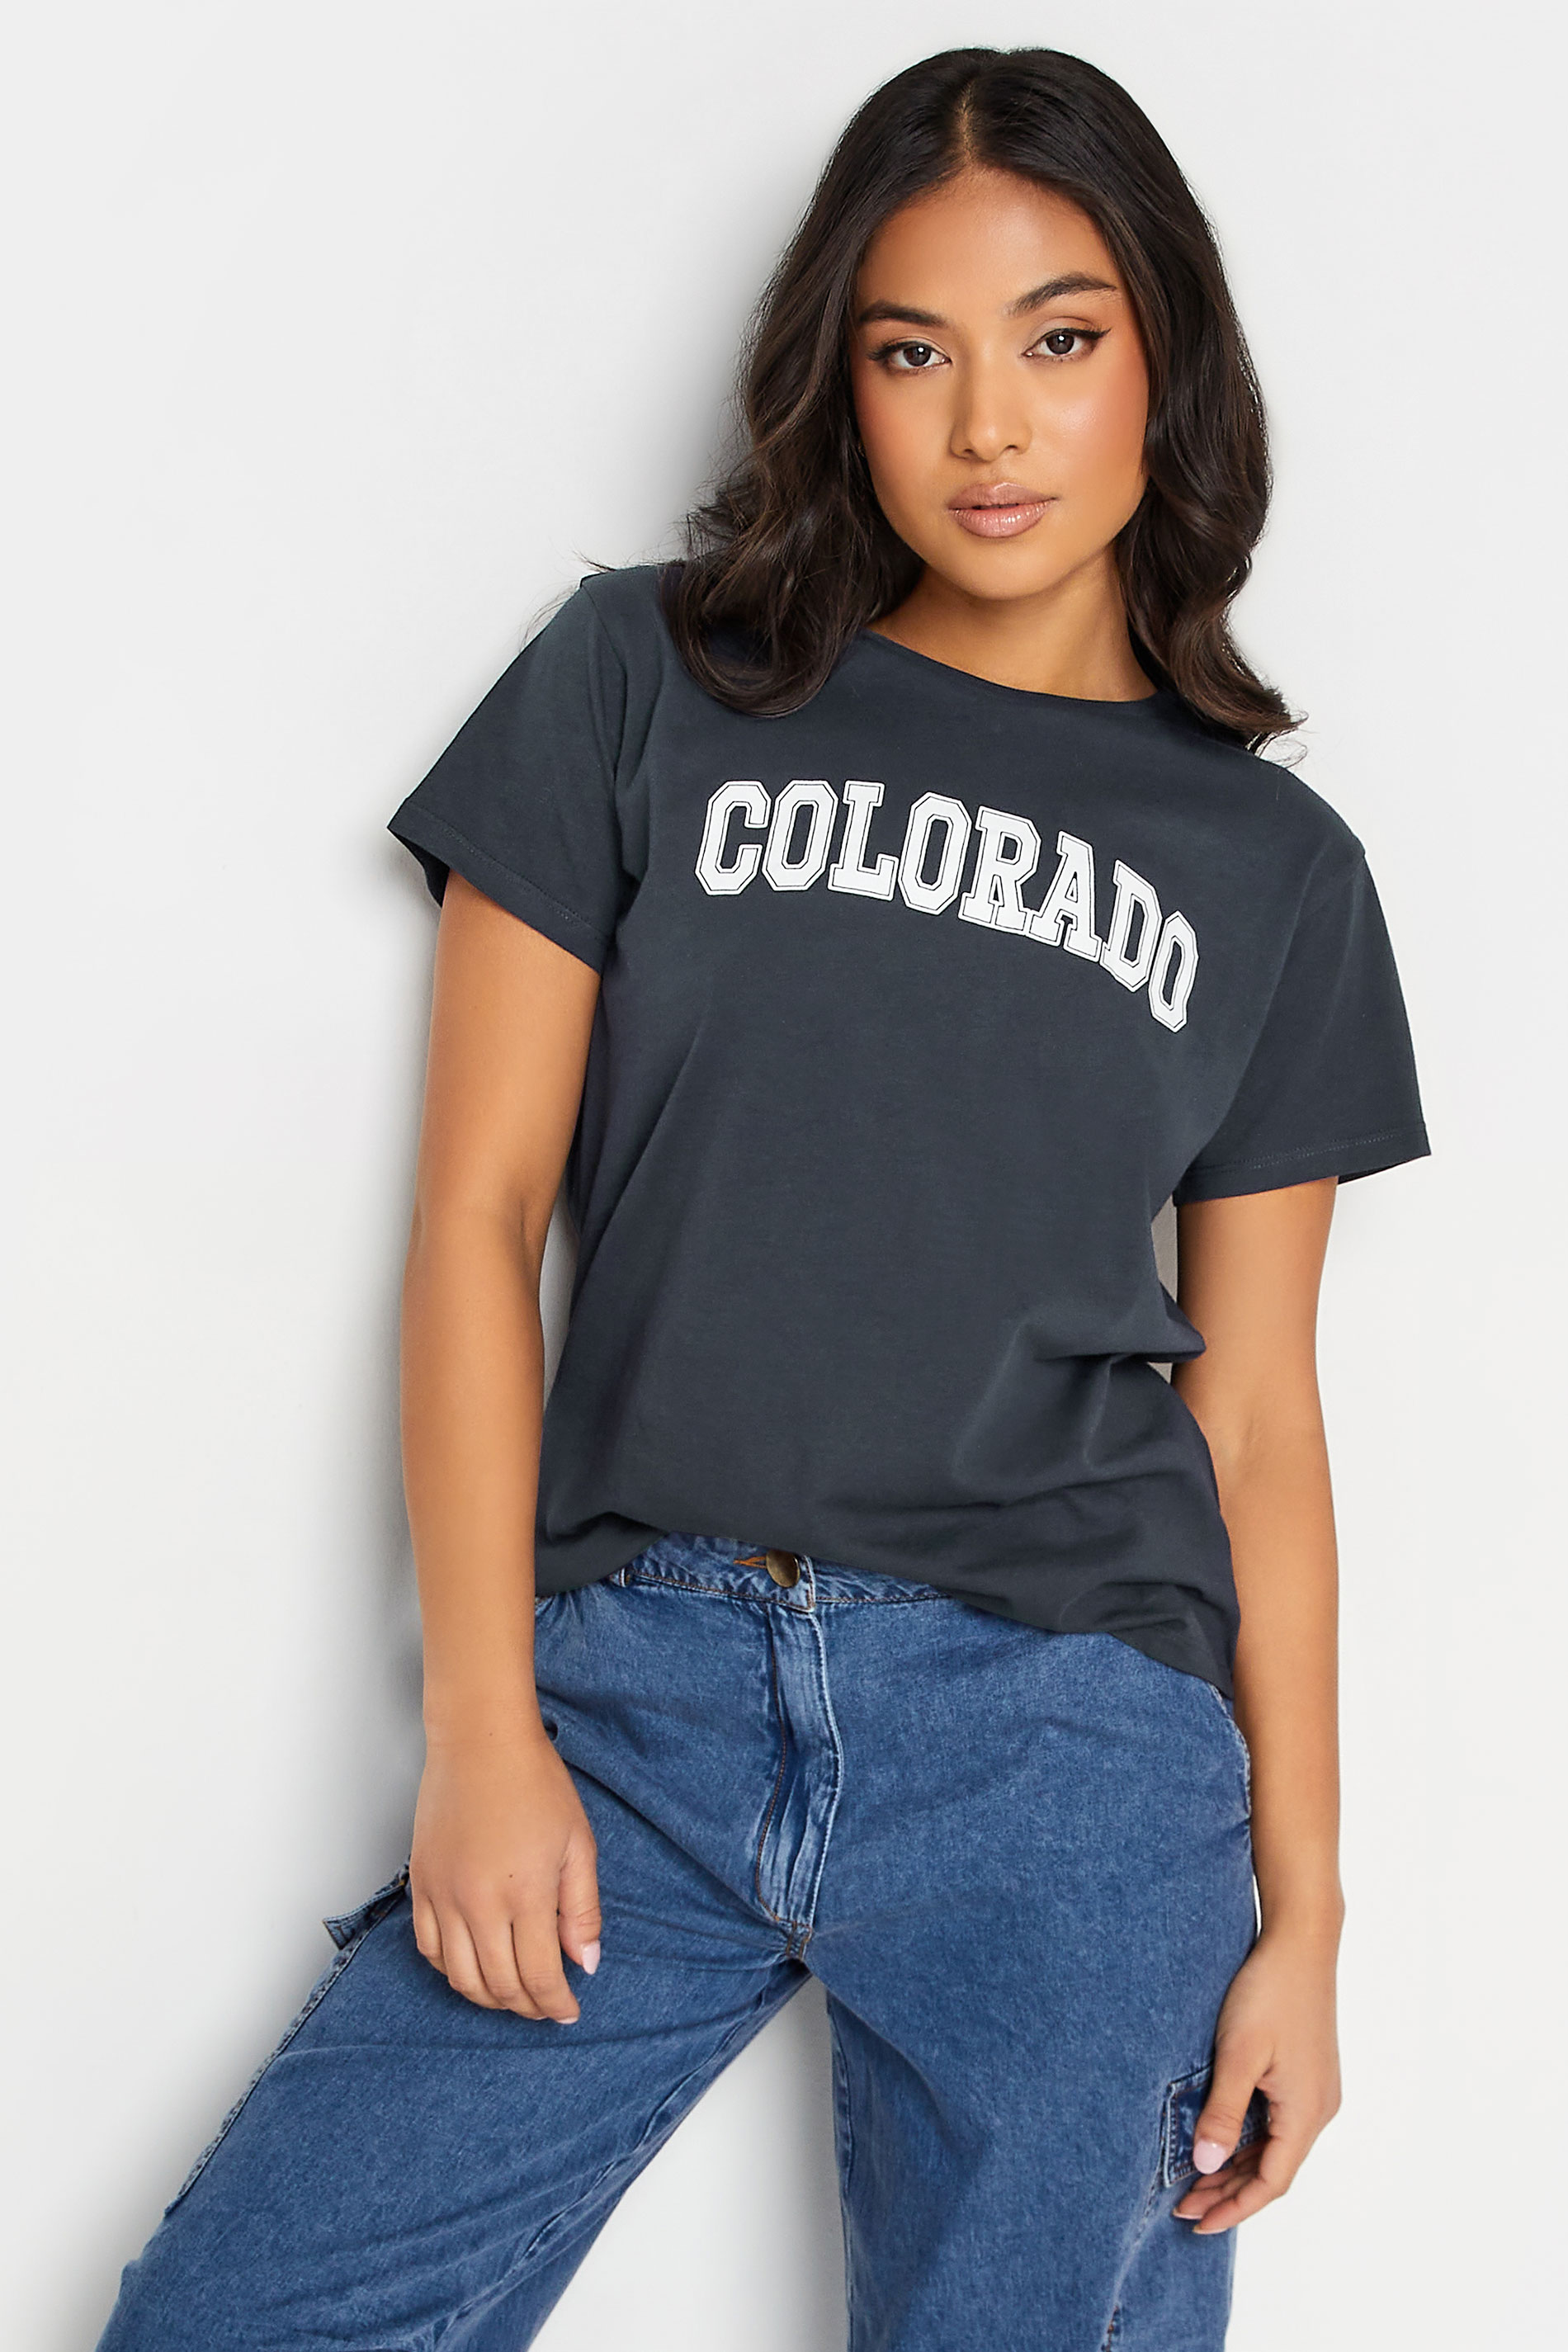 Pixiegirl Navy Blue 'Colorado' Slogan Tshirt 18 Pixiegirl | Petite Women's T-Shirts product